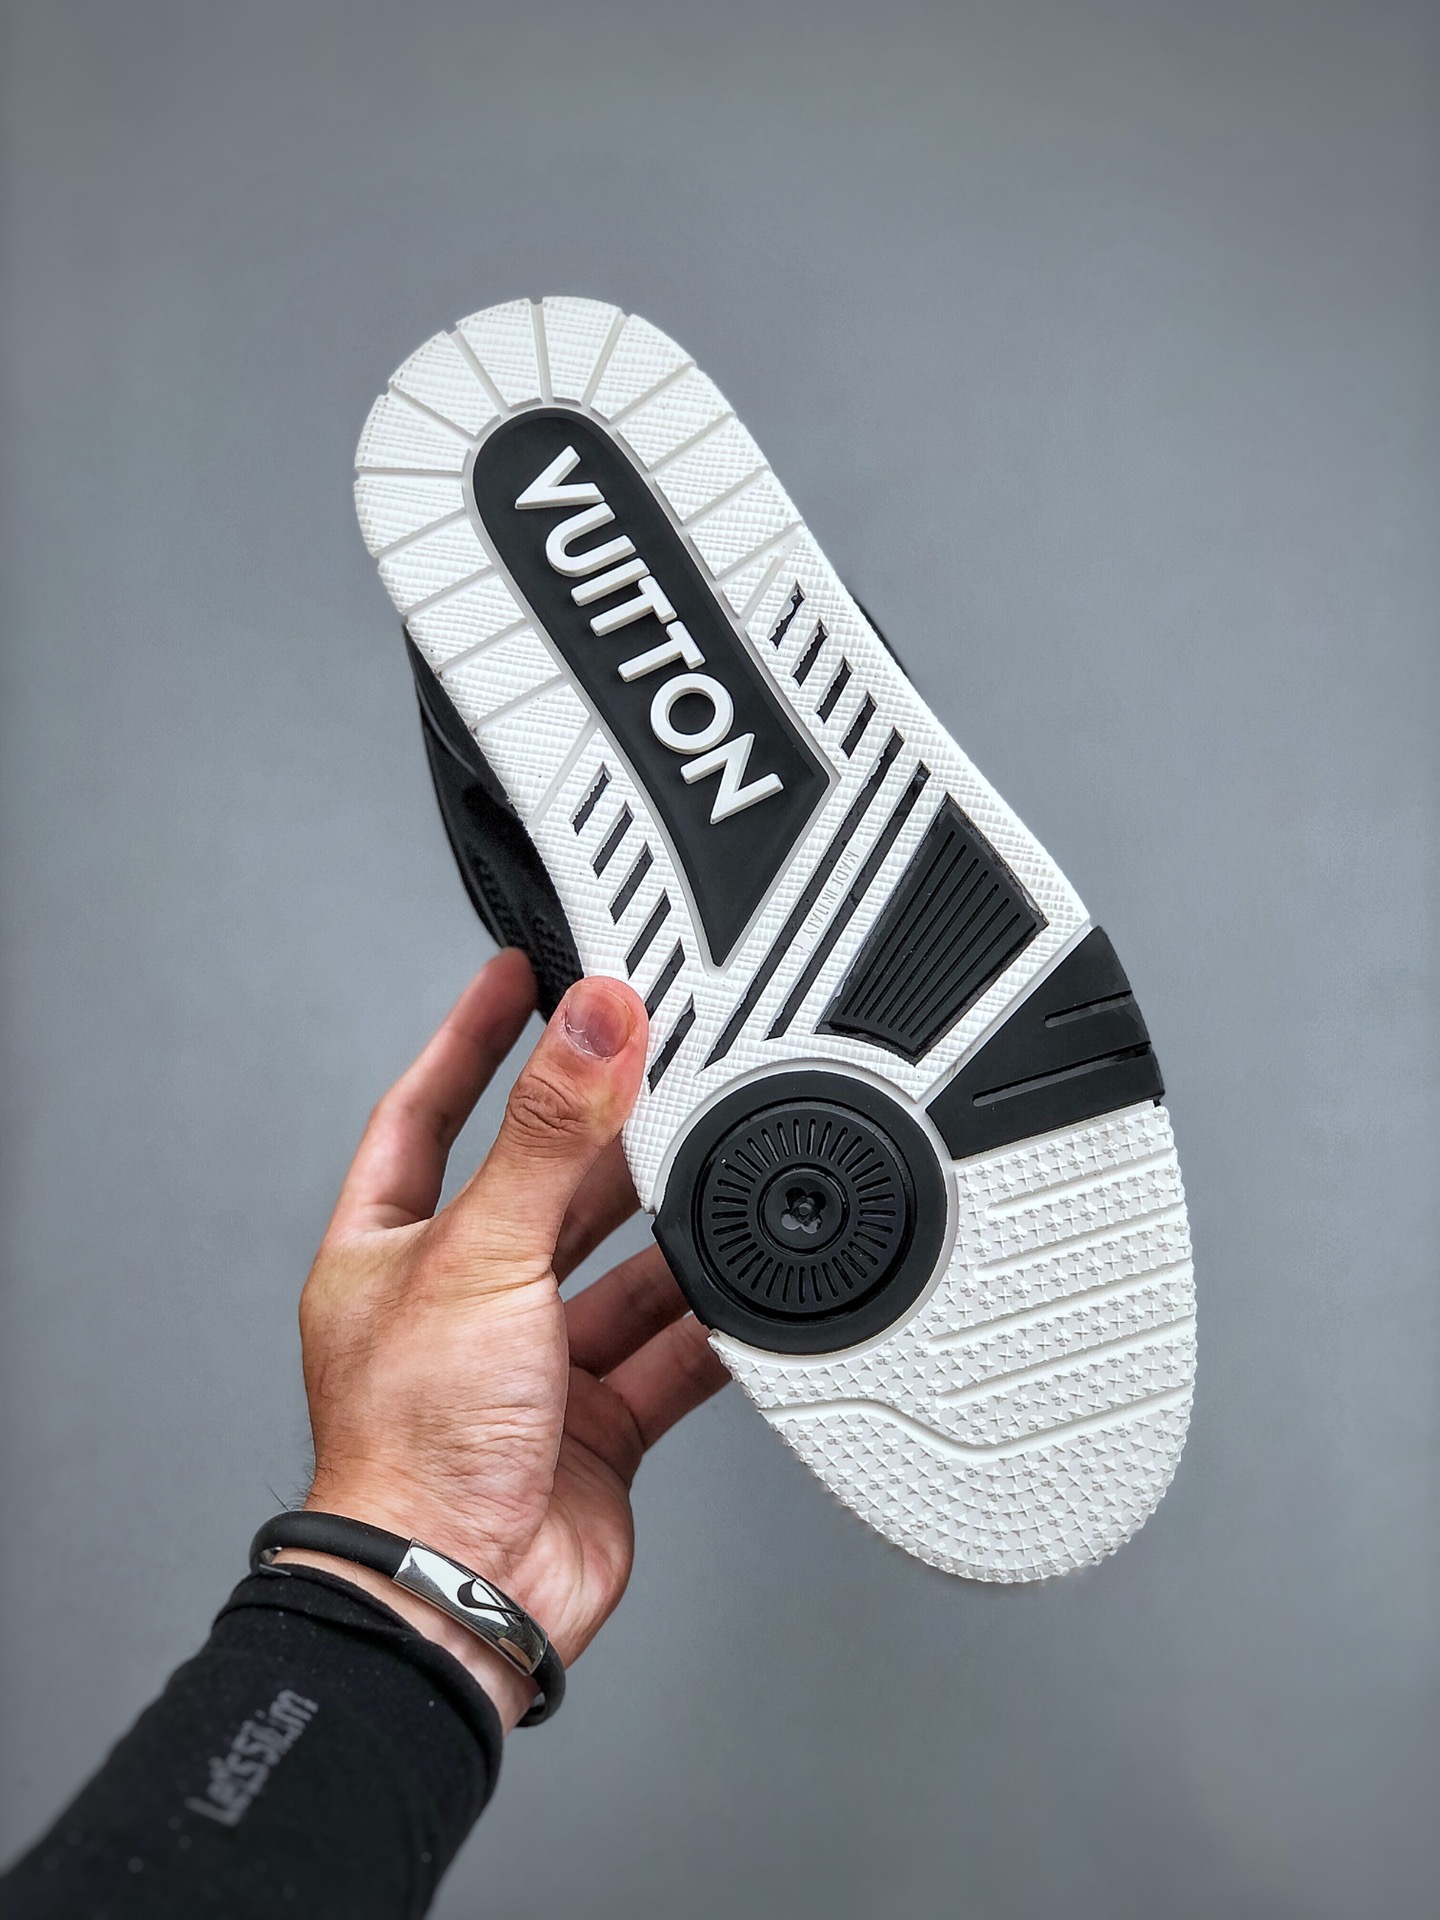 JO pure original bread shoes #LV classic sneakers Louis Vuitton 2023Trainer series